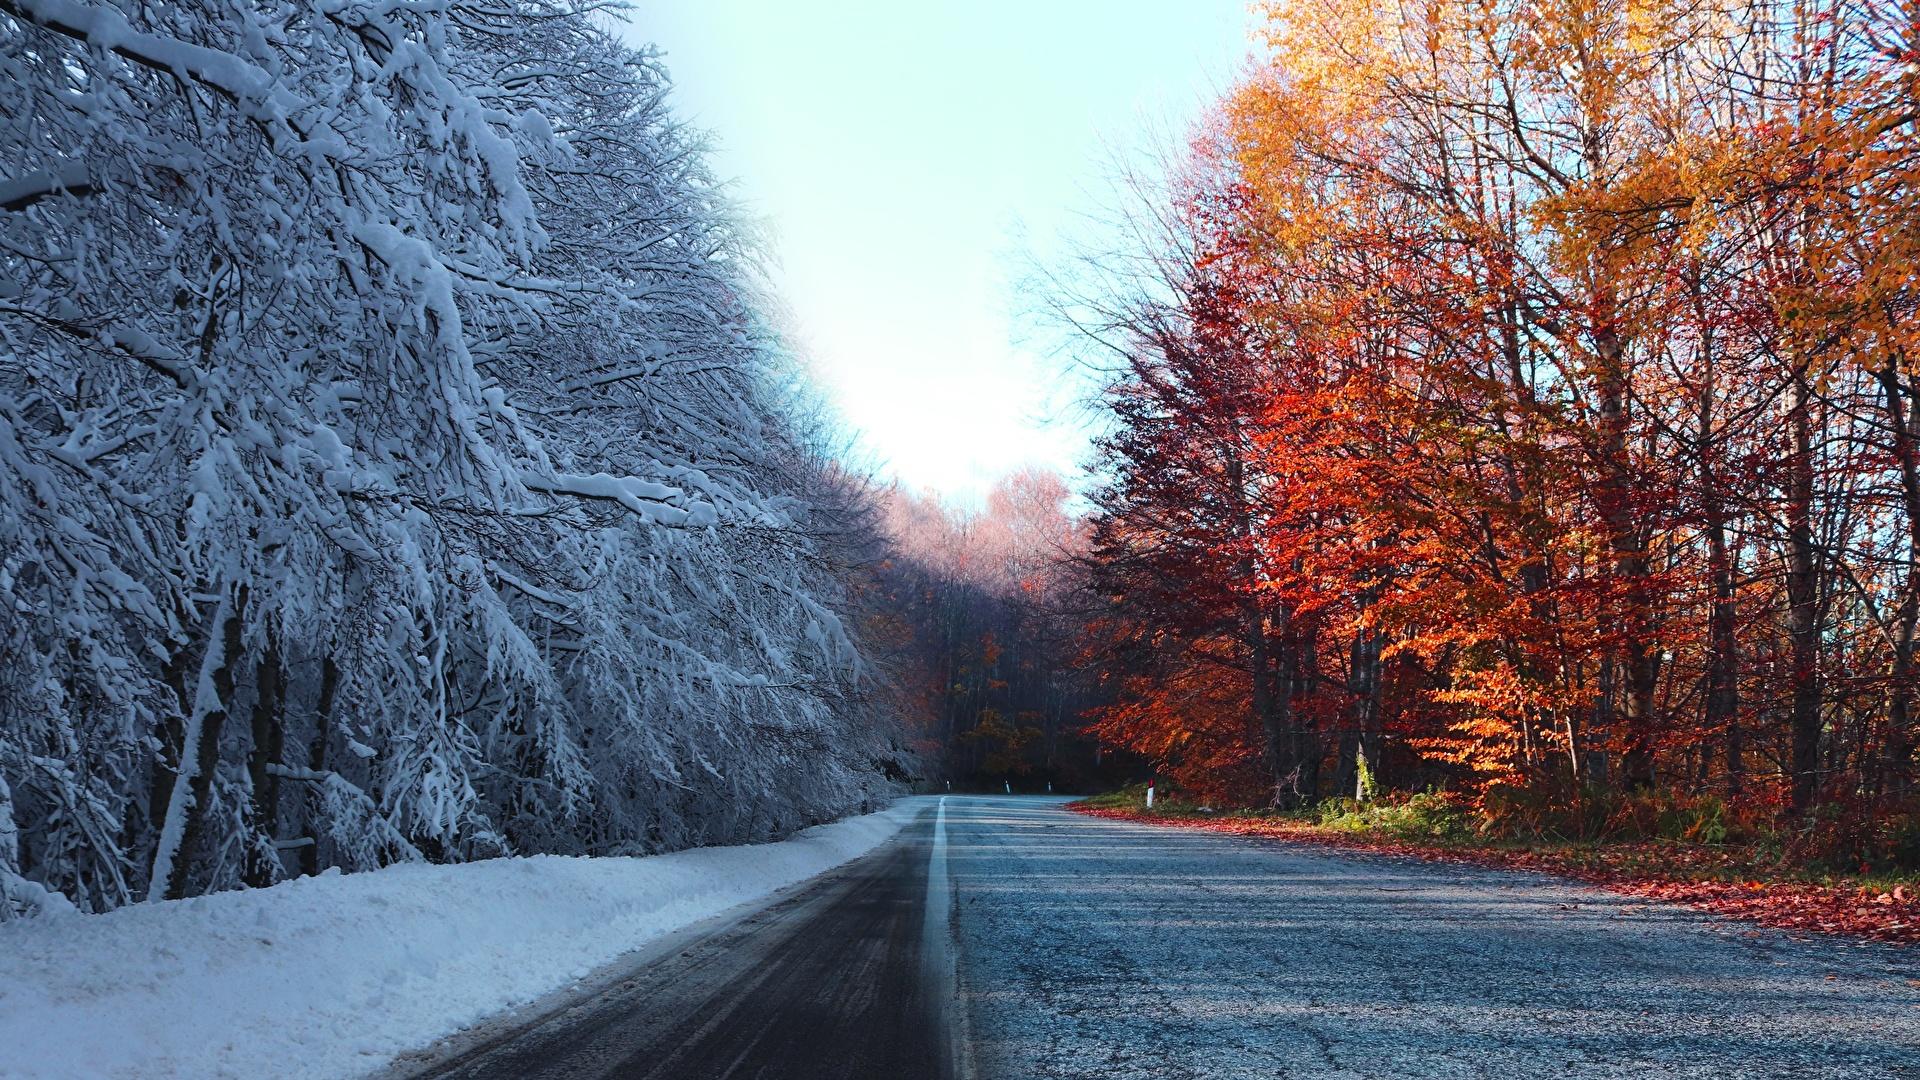 Картинка Зима Осень Природа Снег Дороги дерево 1920x1080